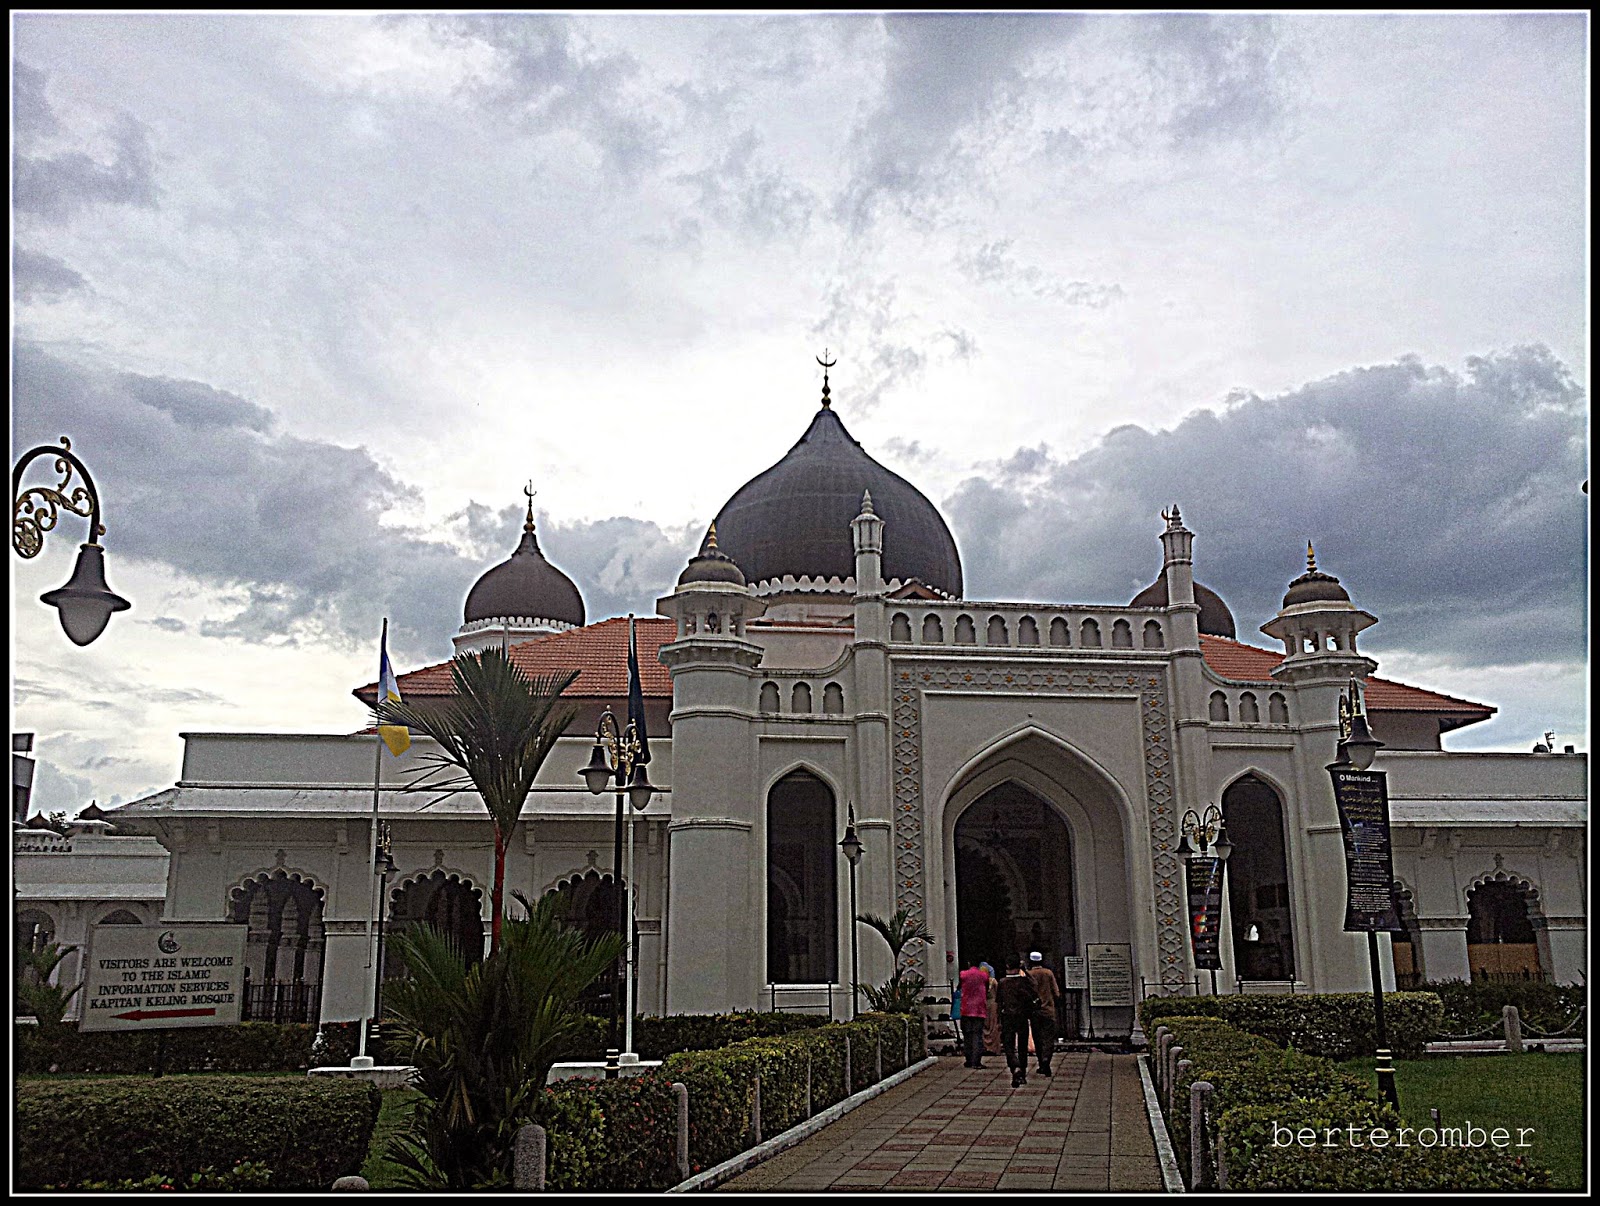 BERTEROMBER: Masjid Kapitan Keling